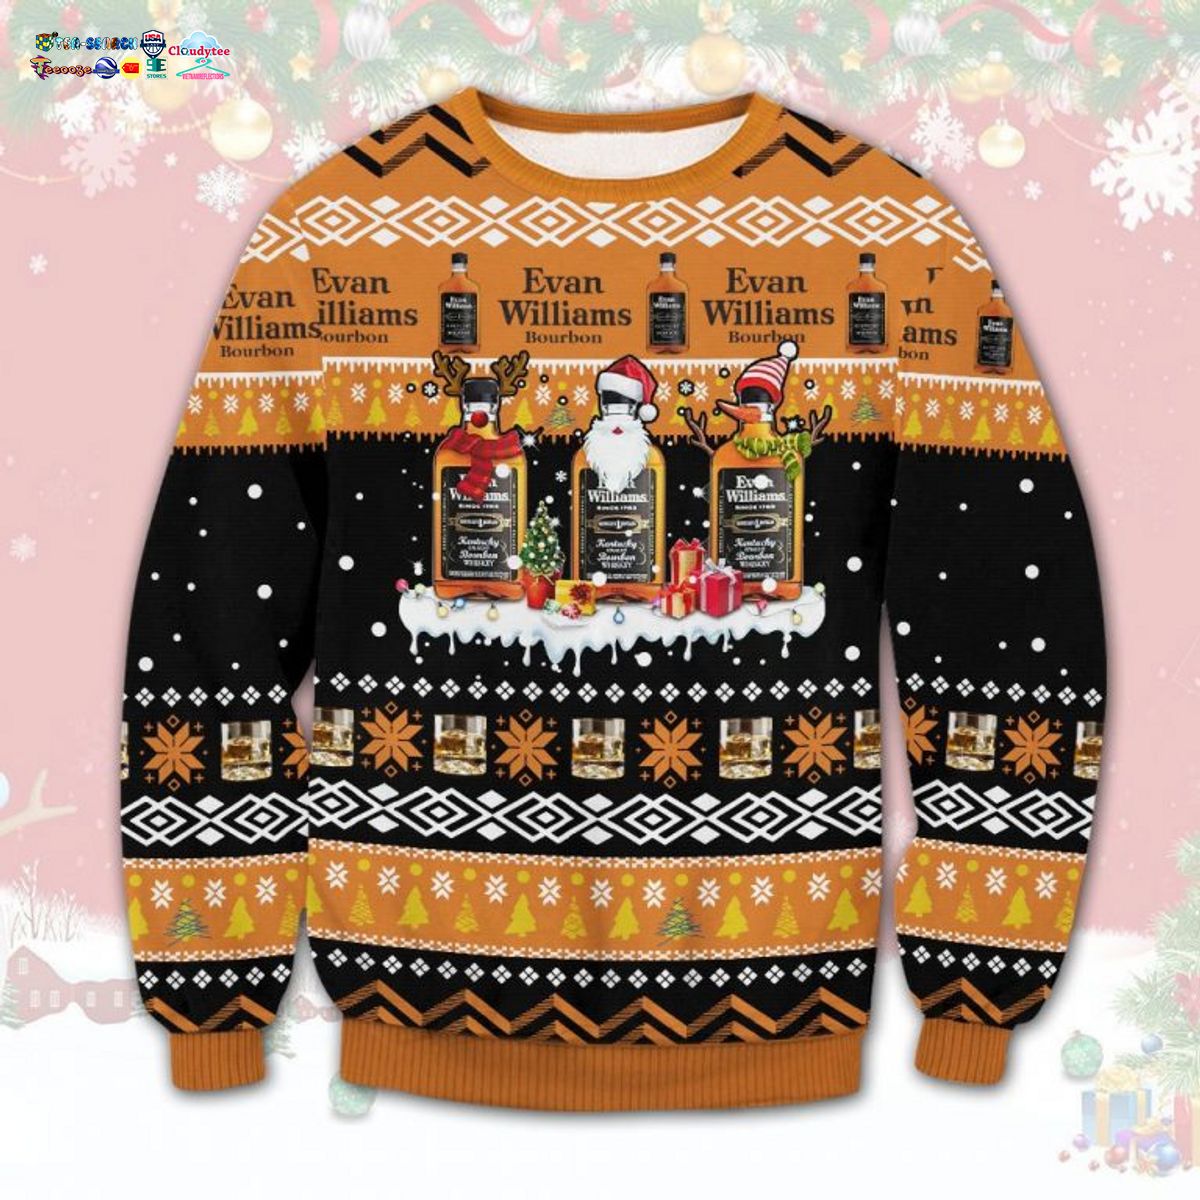 Evan Williams Bourbon Ugly Christmas Sweater